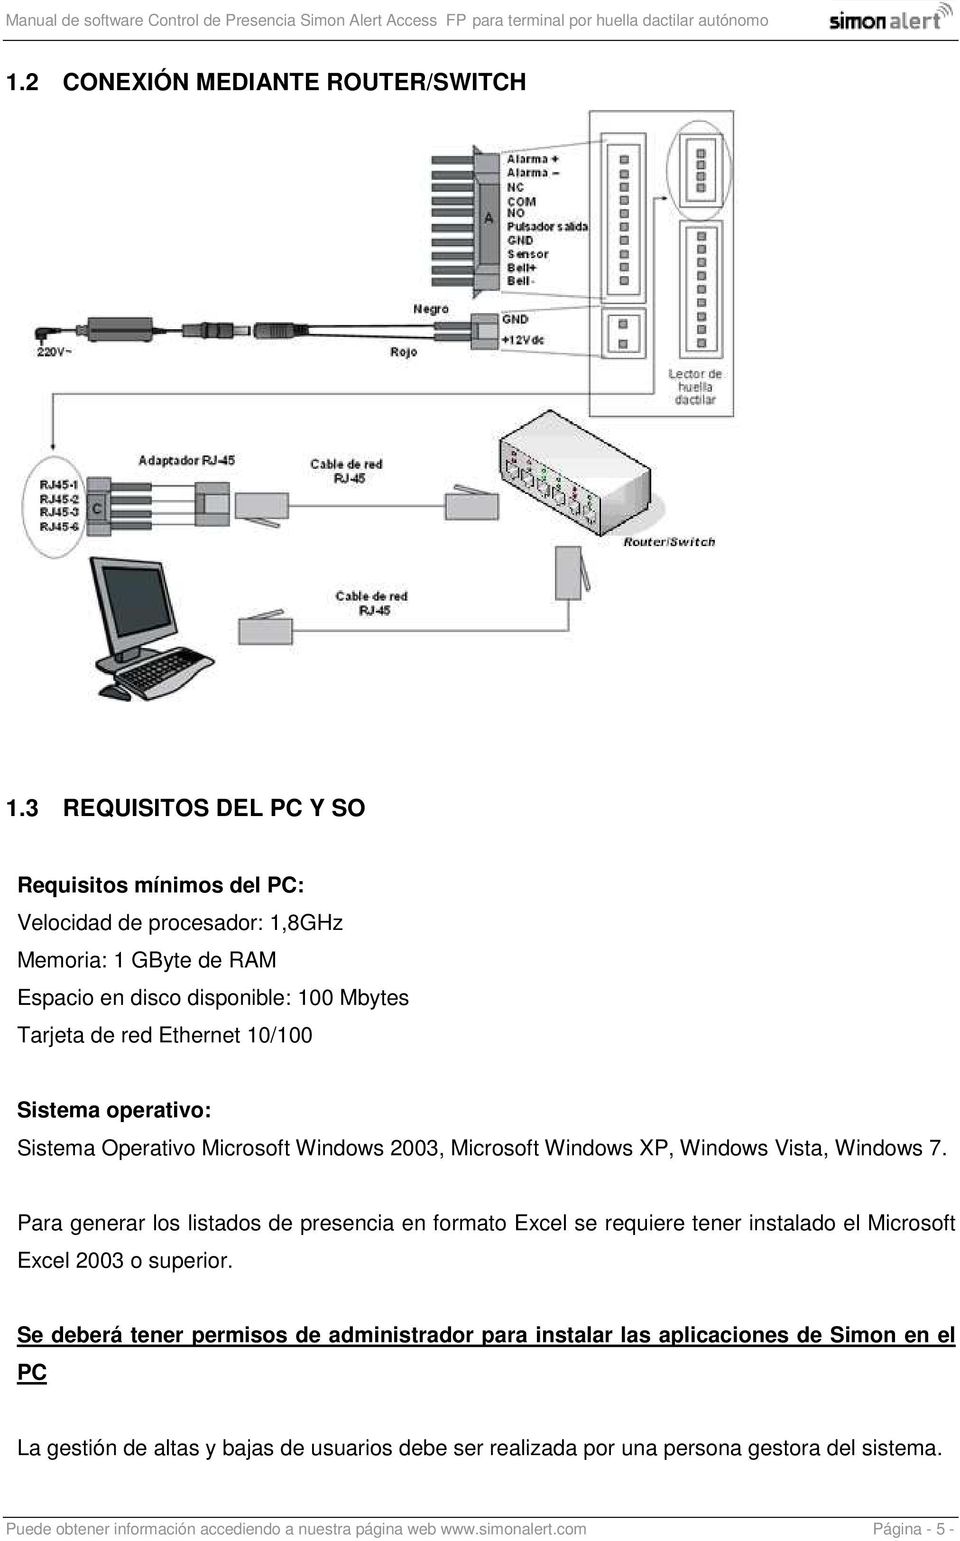 Sistema operativo: Sistema Operativo Microsoft Windows 2003, Microsoft Windows XP, Windows Vista, Windows 7.